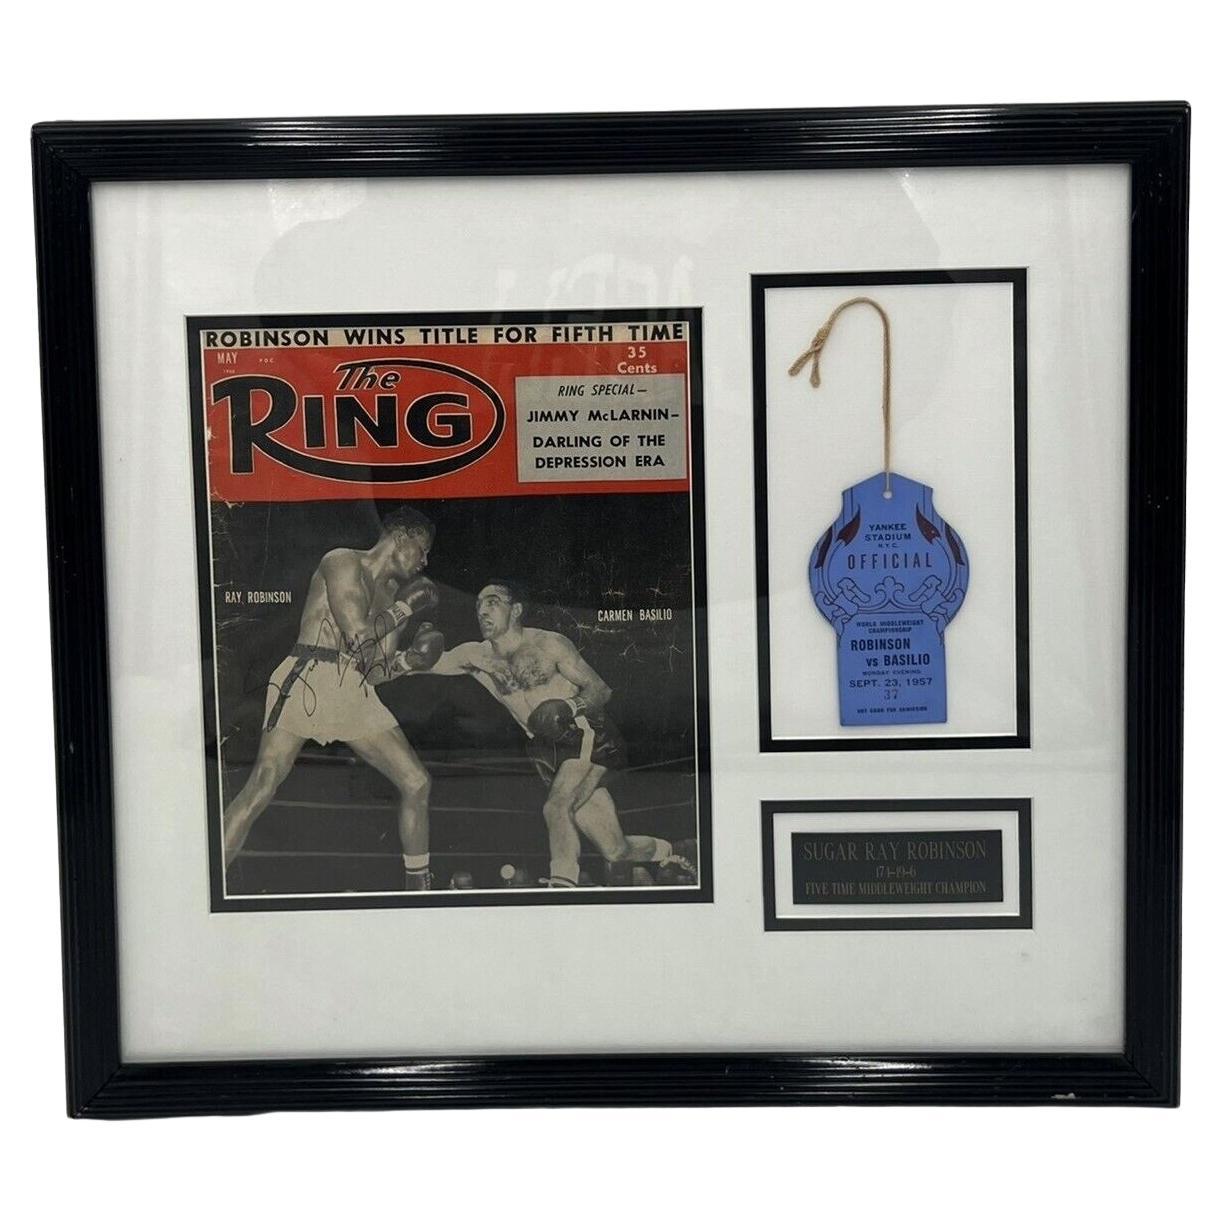 Sugar Ray Robinson Autographed Display and 1957 Yankee Stadium Tag